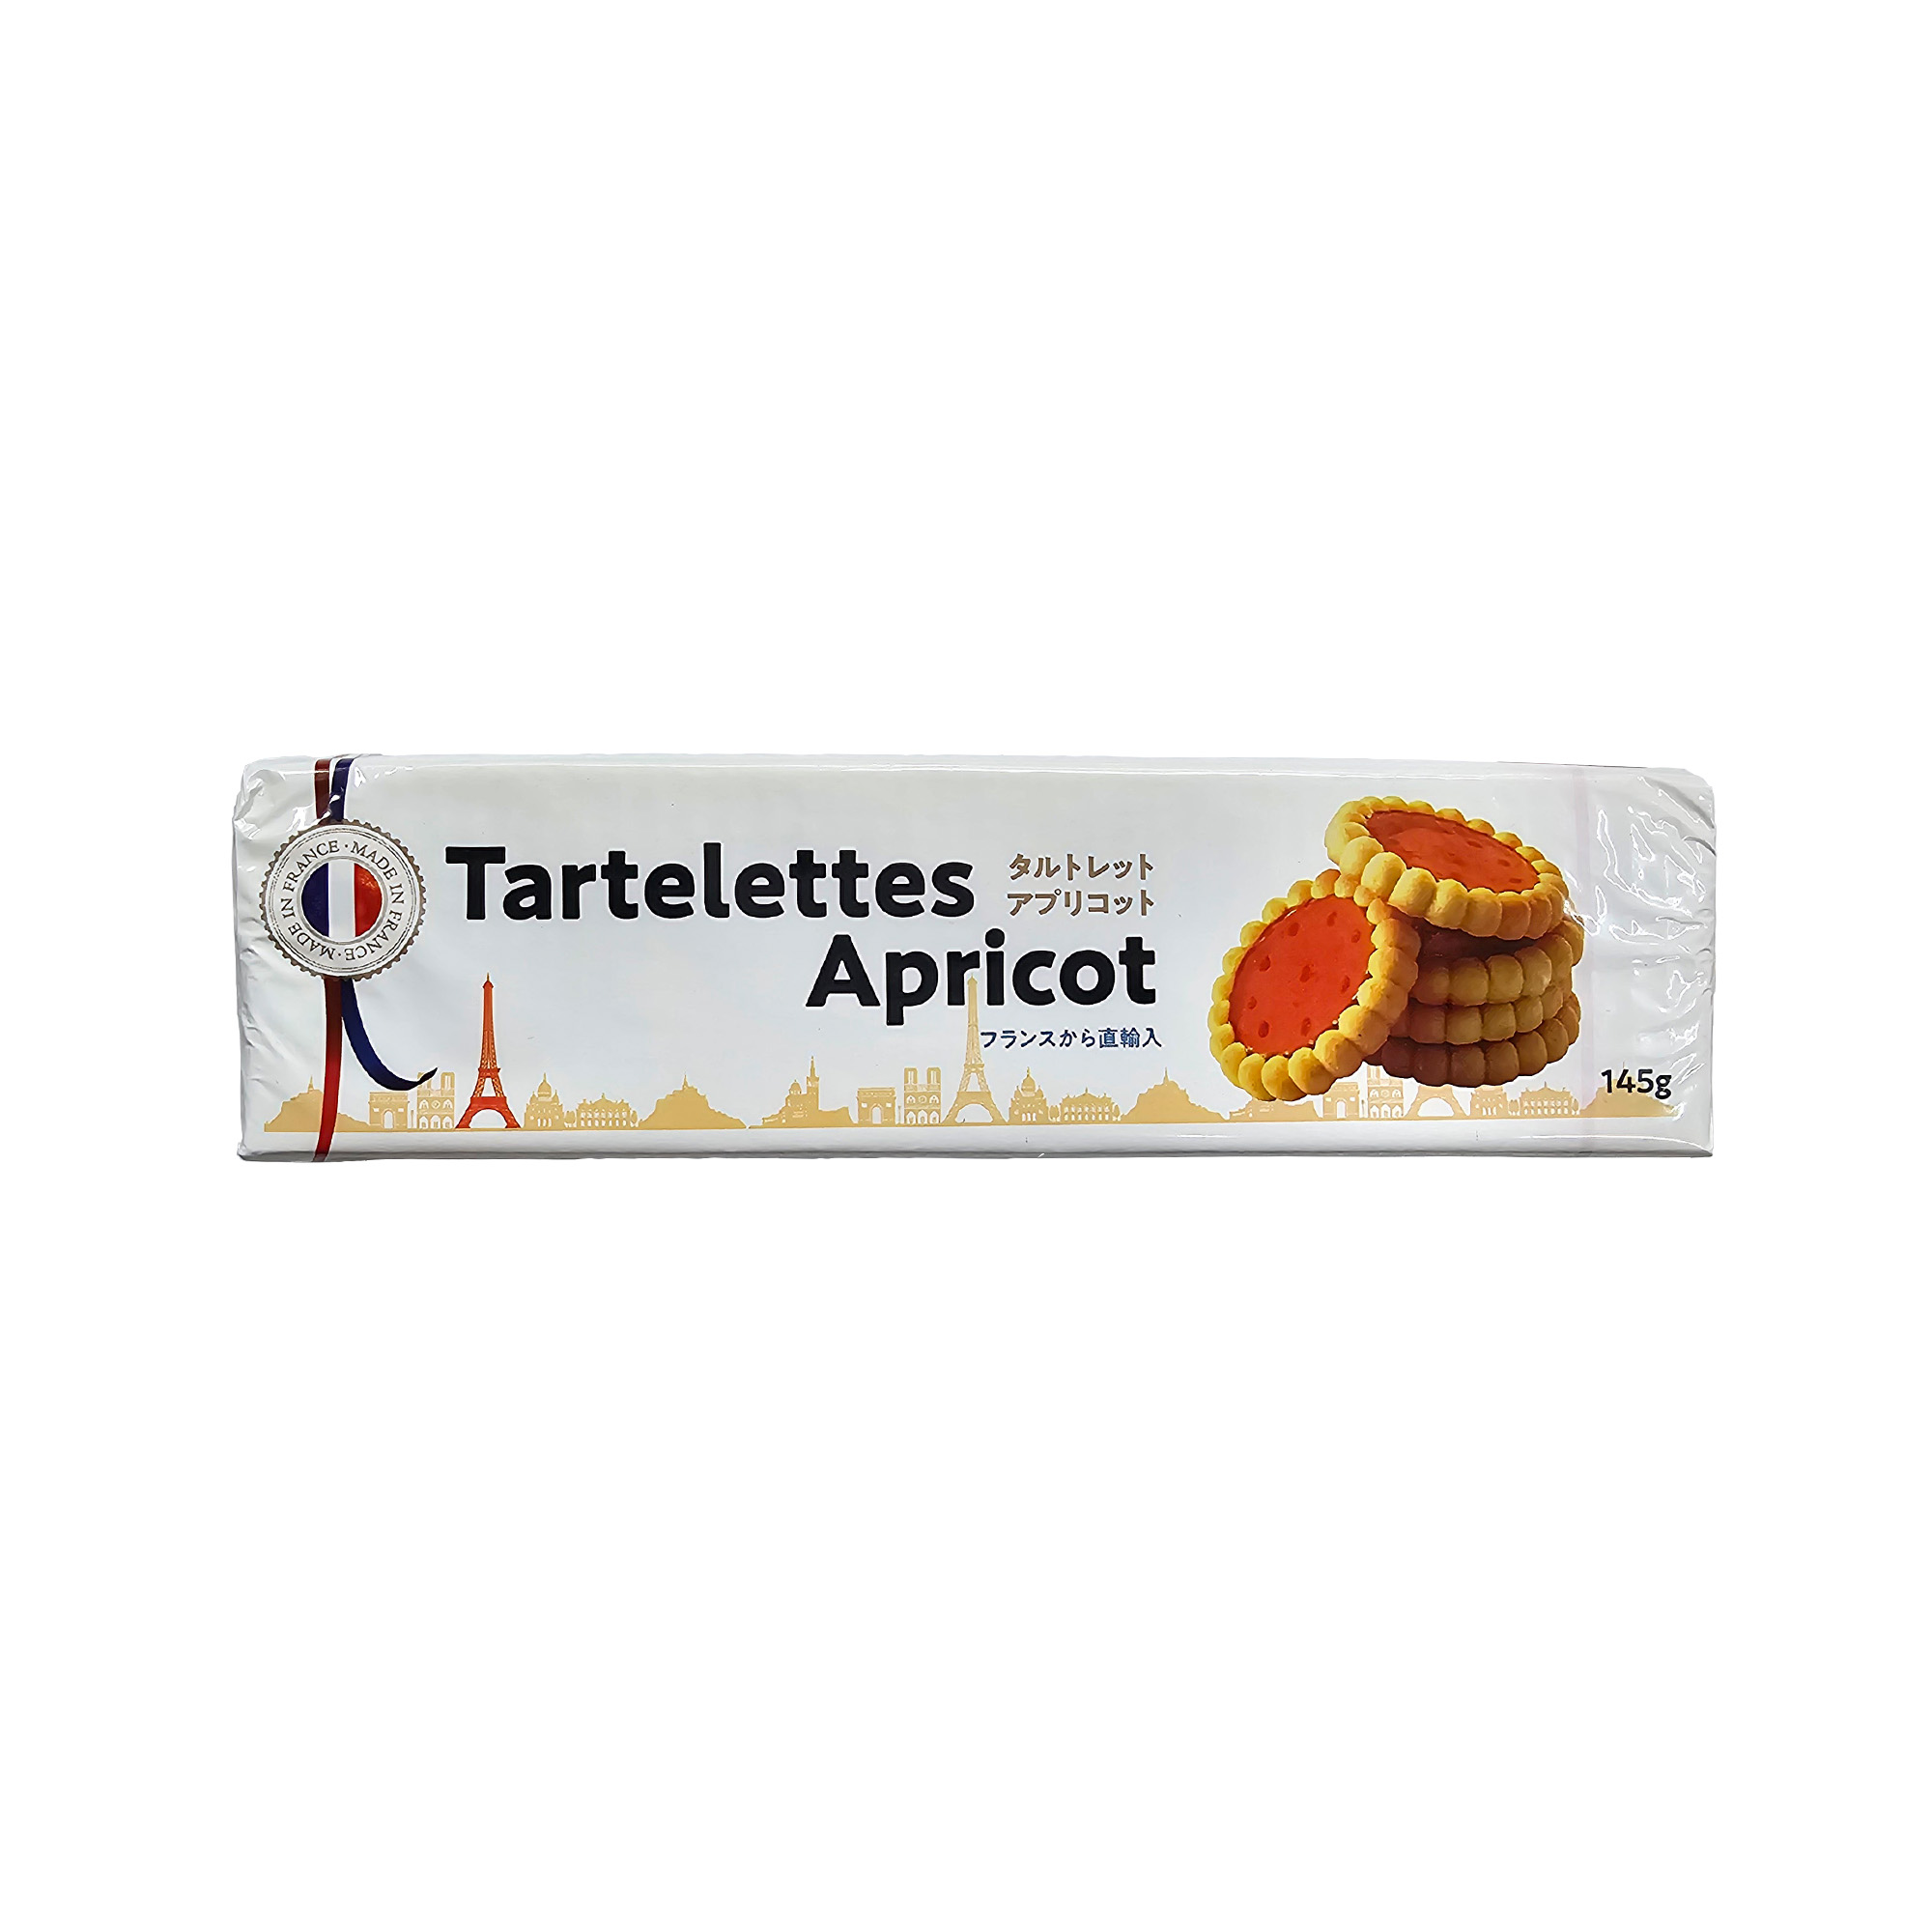 Tartelettes Apricot Biscuit / タルトレットアプリコットビスケット